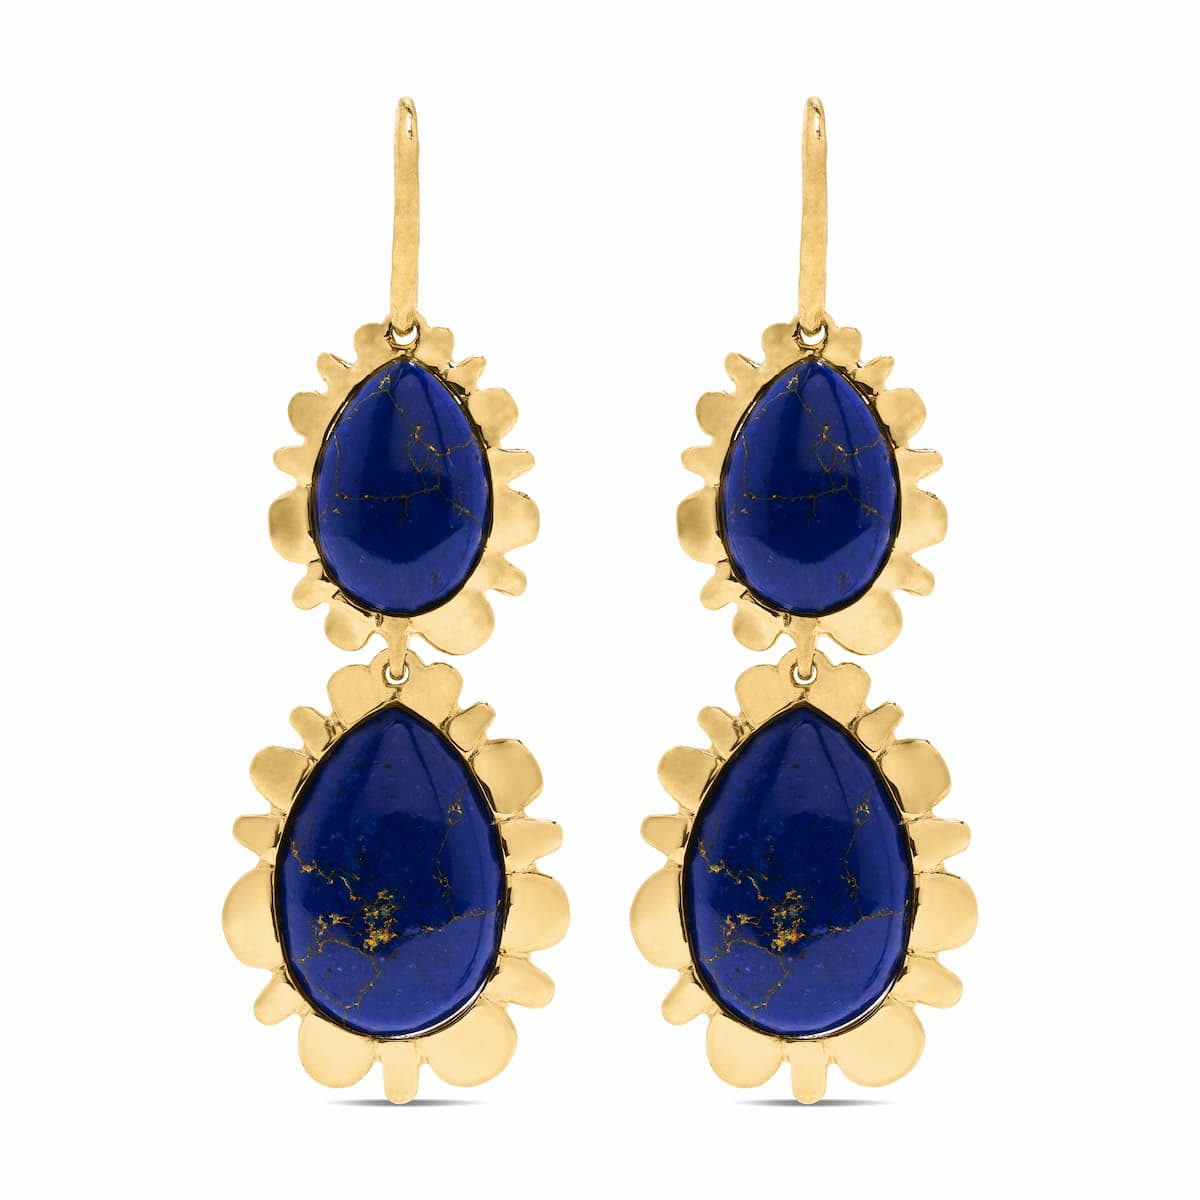 Gold double drop earrings with dark blue labradorite.